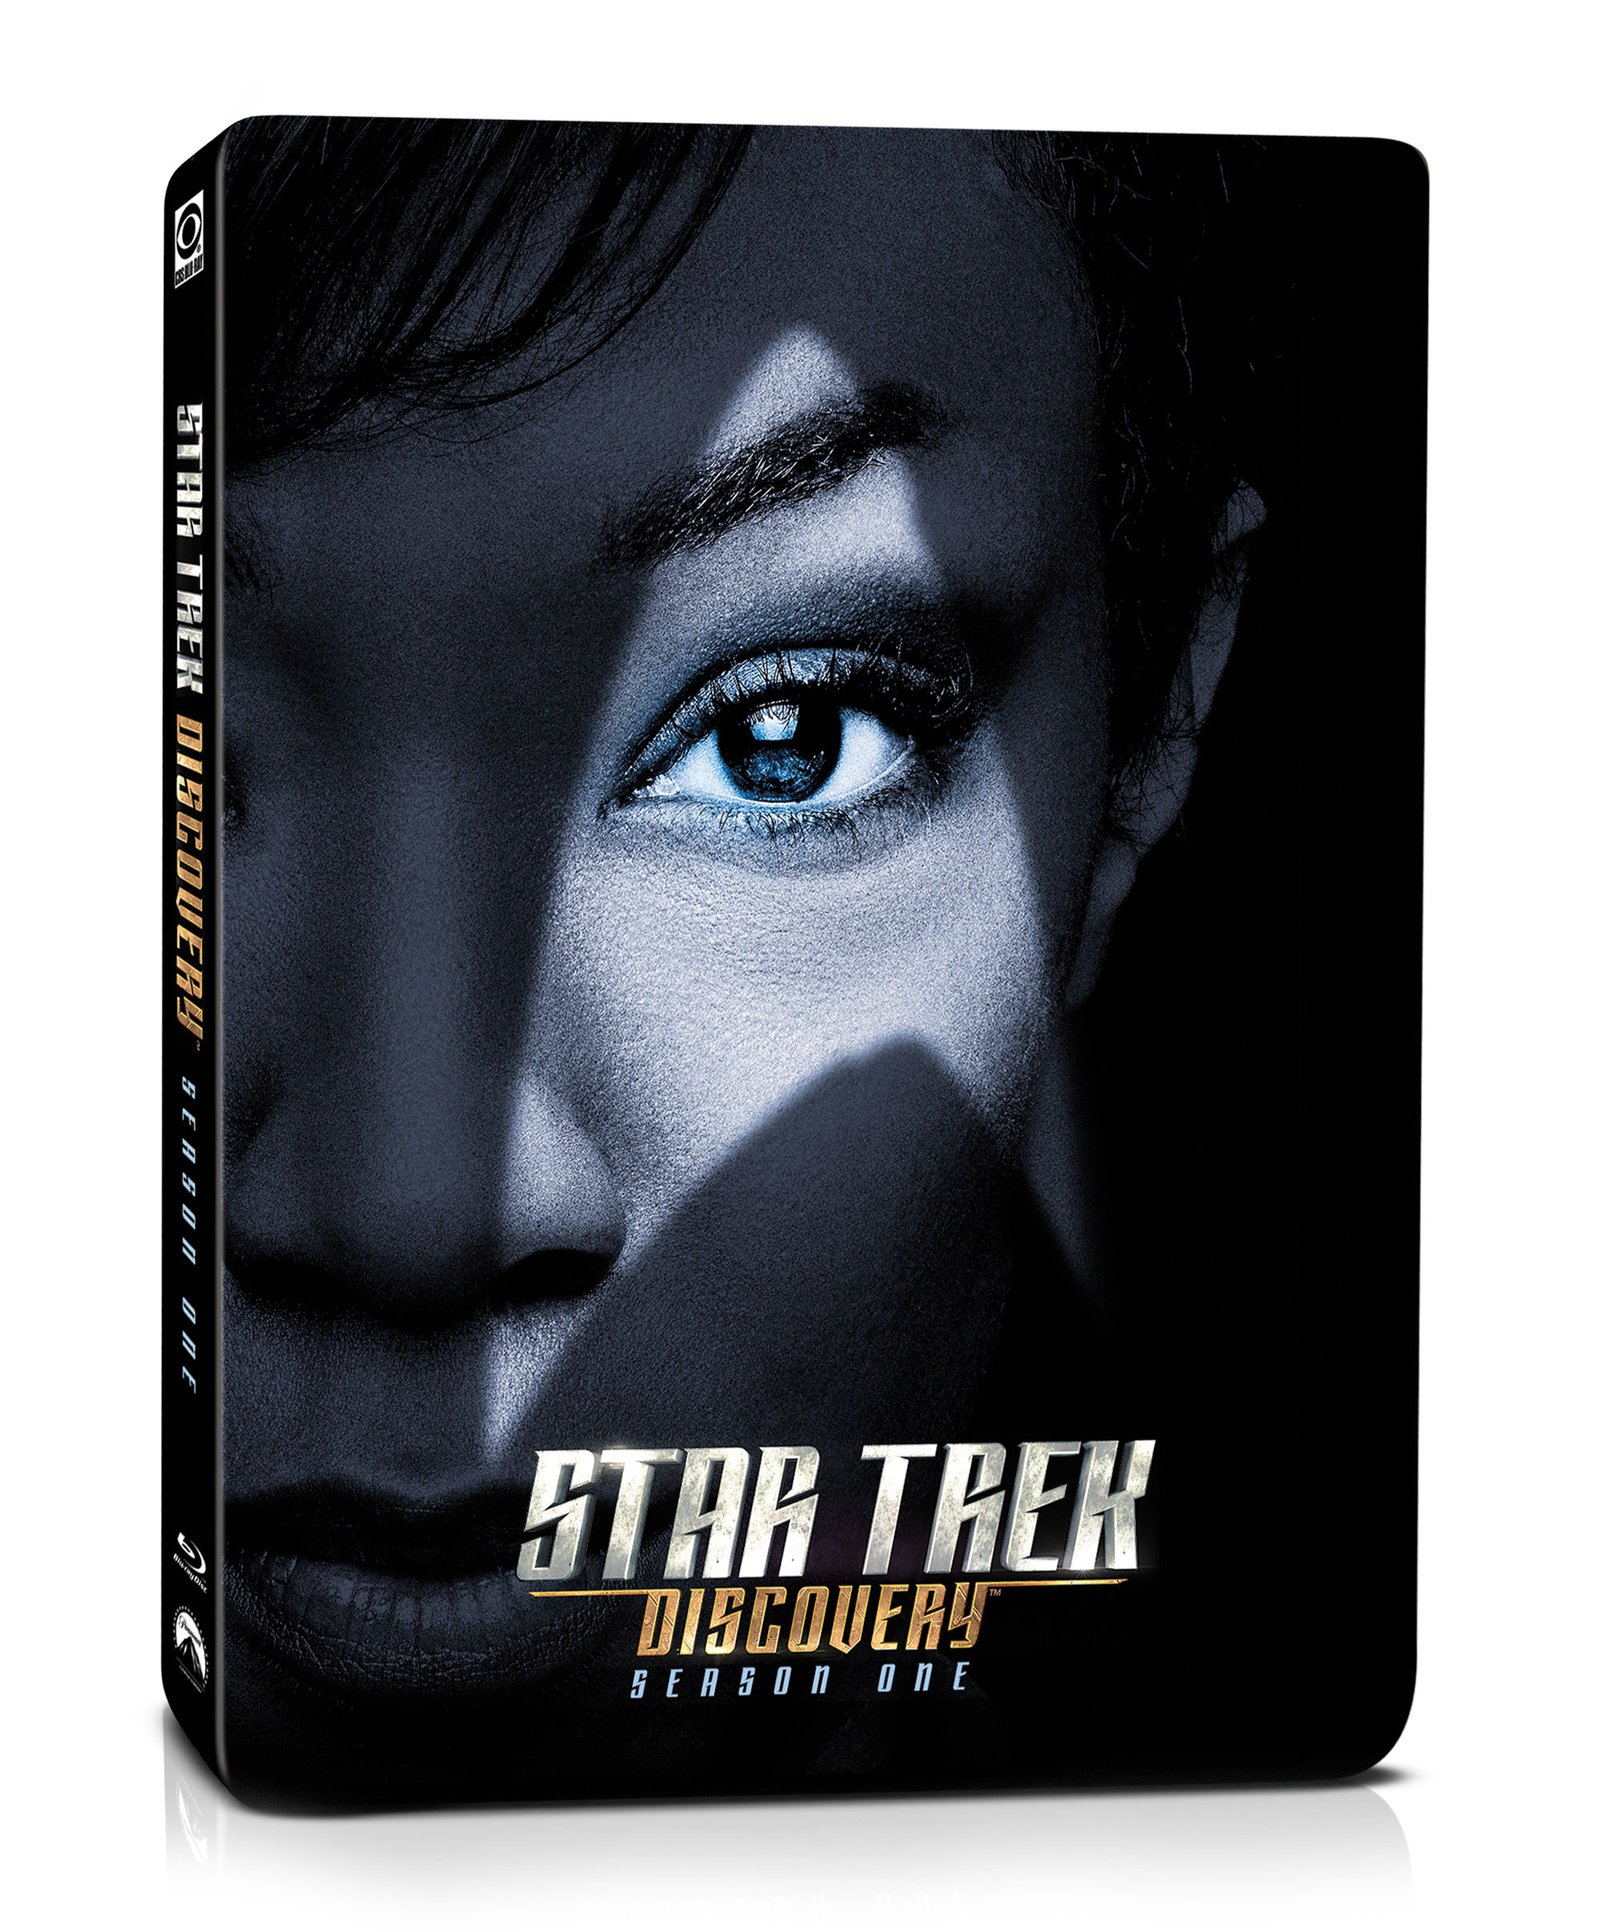 'Star Trek: Discovery' Steelbook Blu-ray